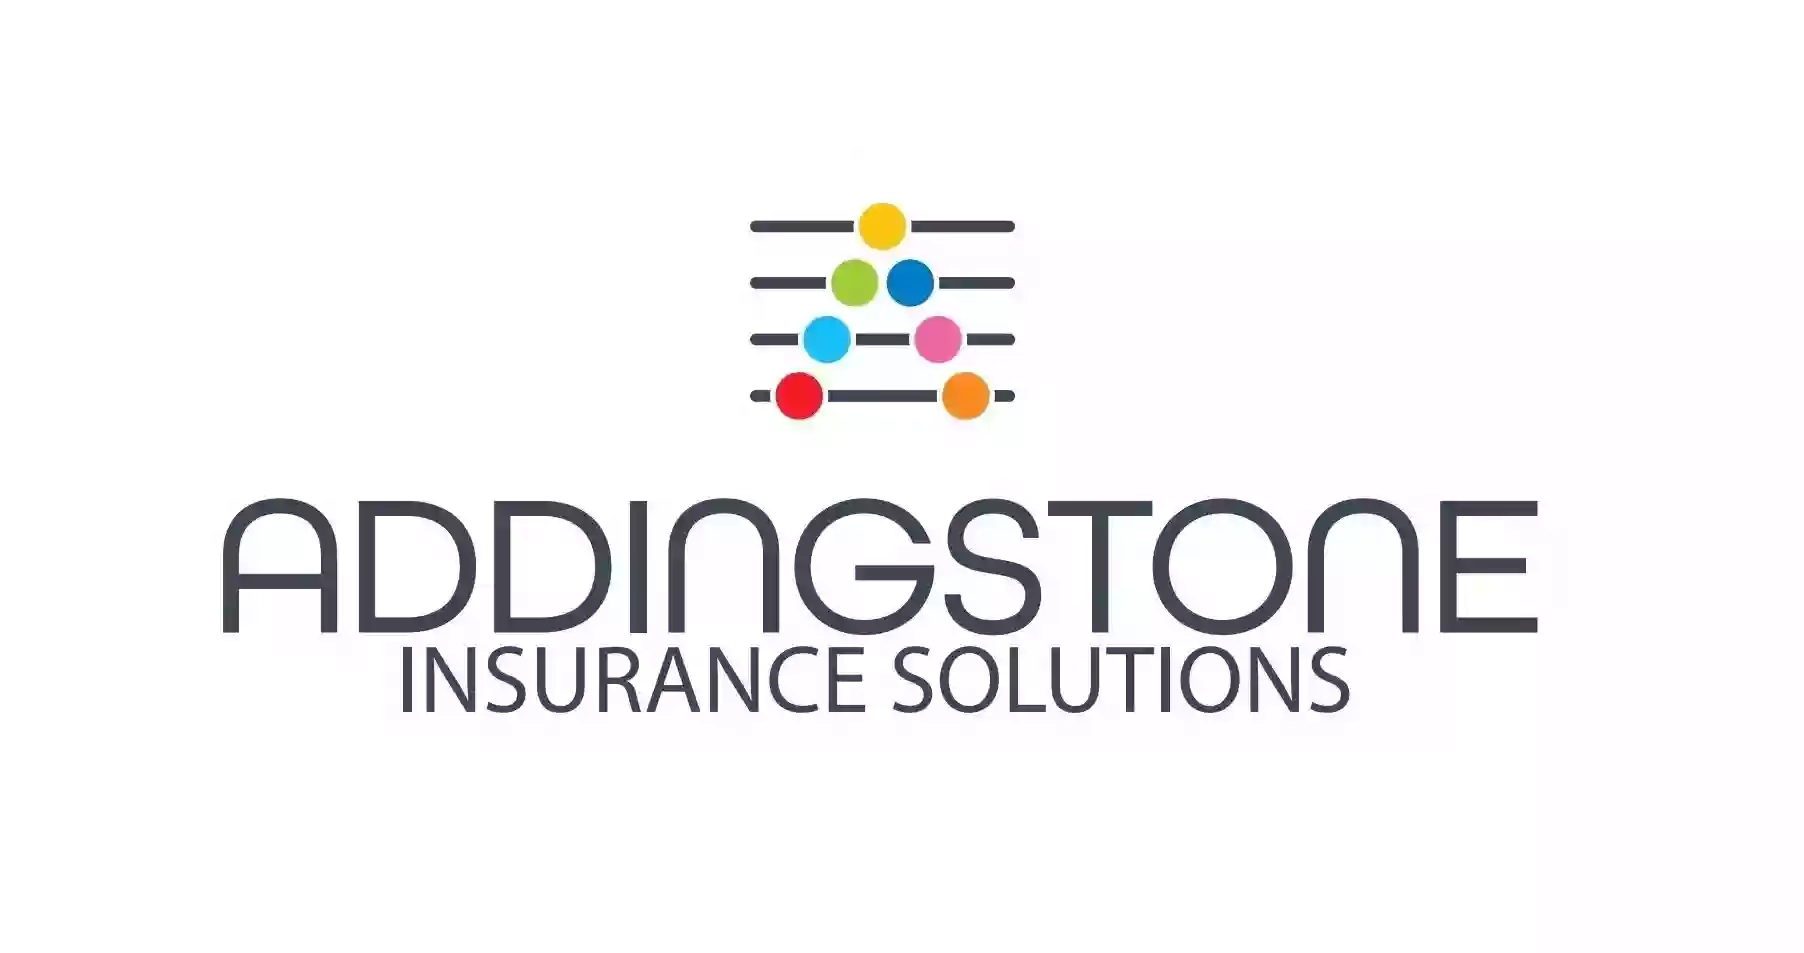 Addingstone Insurance Solutions Ltd